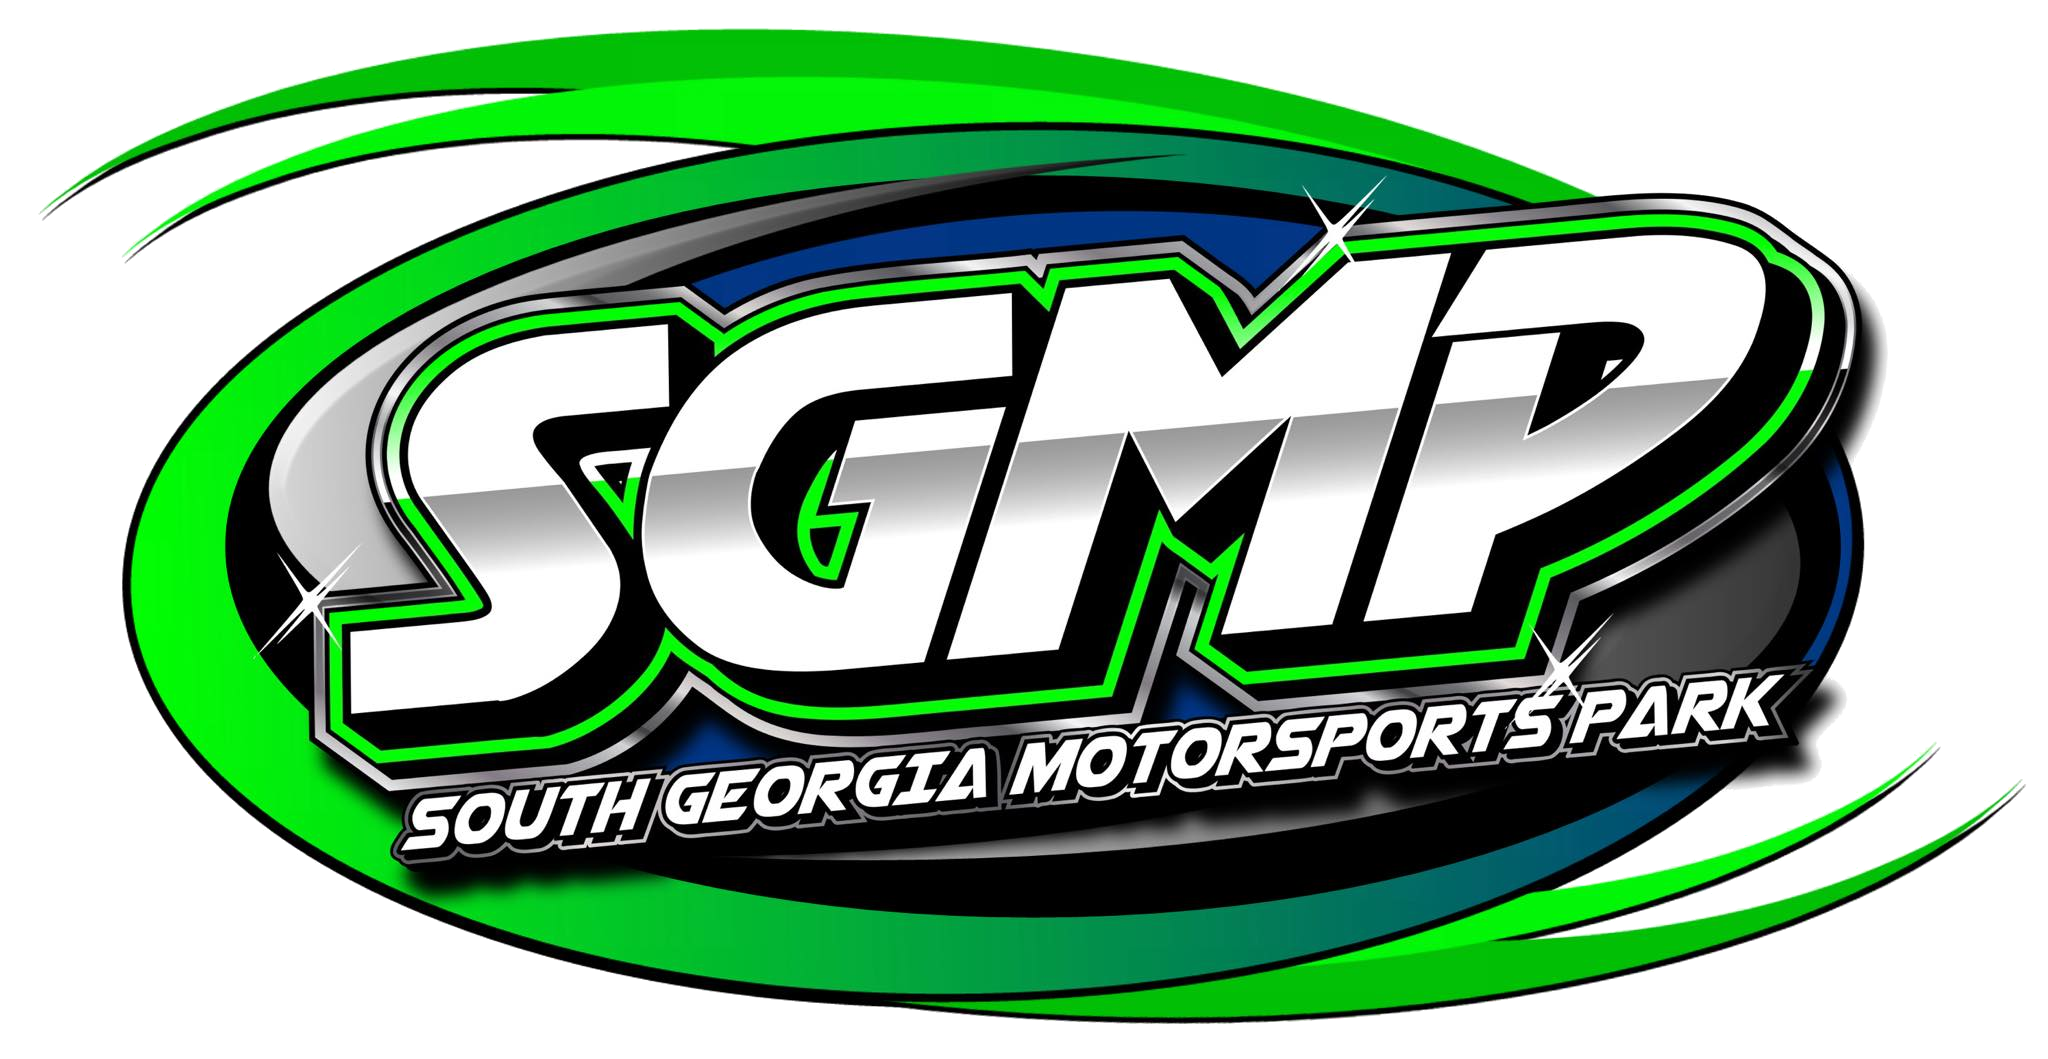 South Georgia Motorsports Park logo